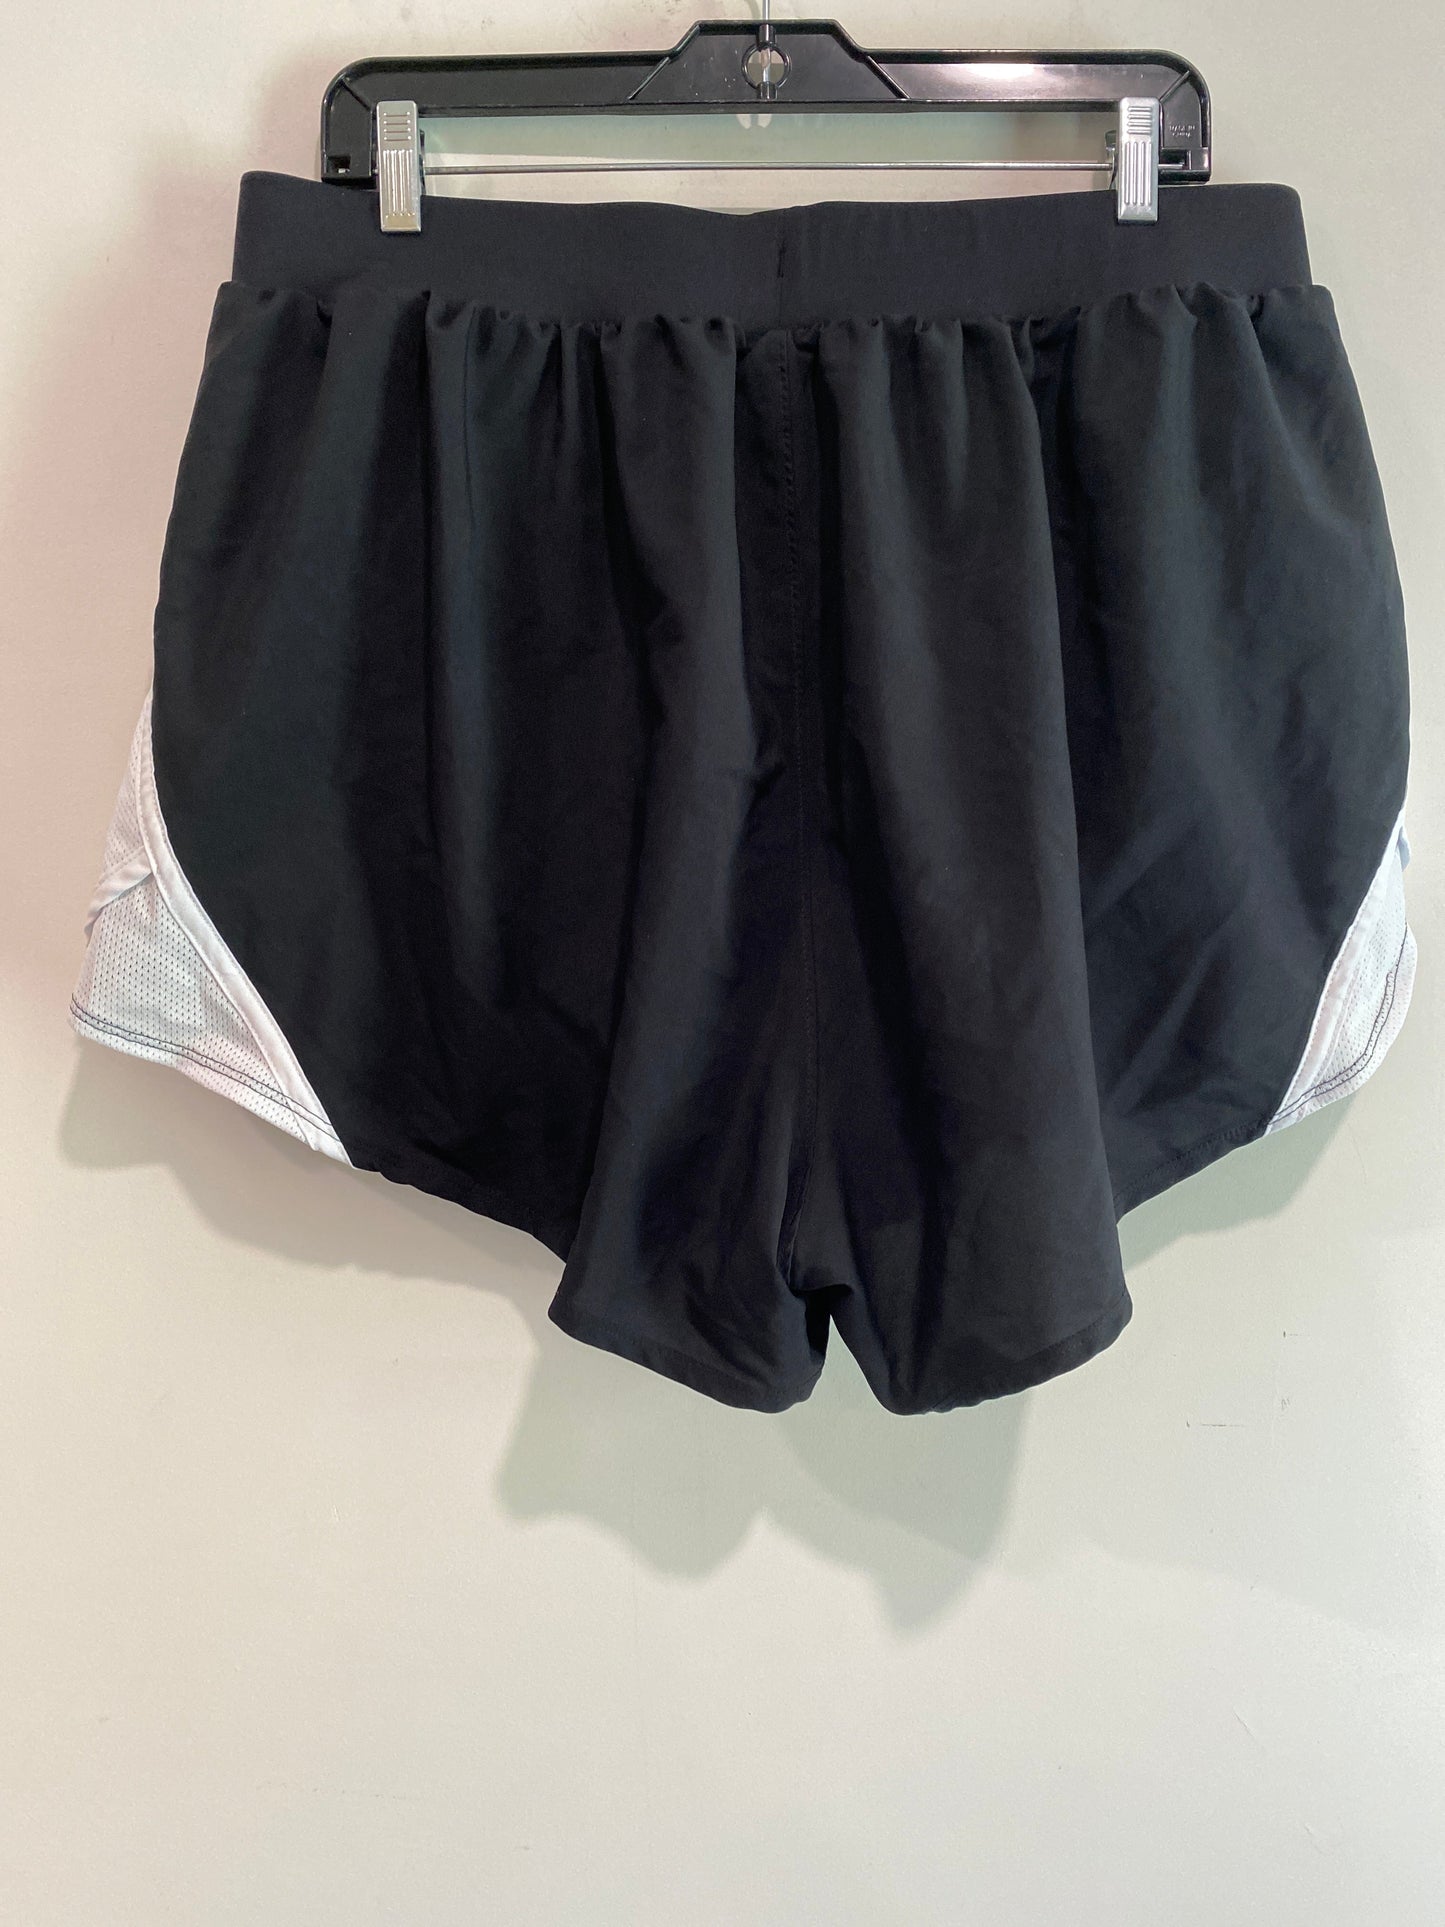 Black Athletic Shorts Under Armour, Size 1x